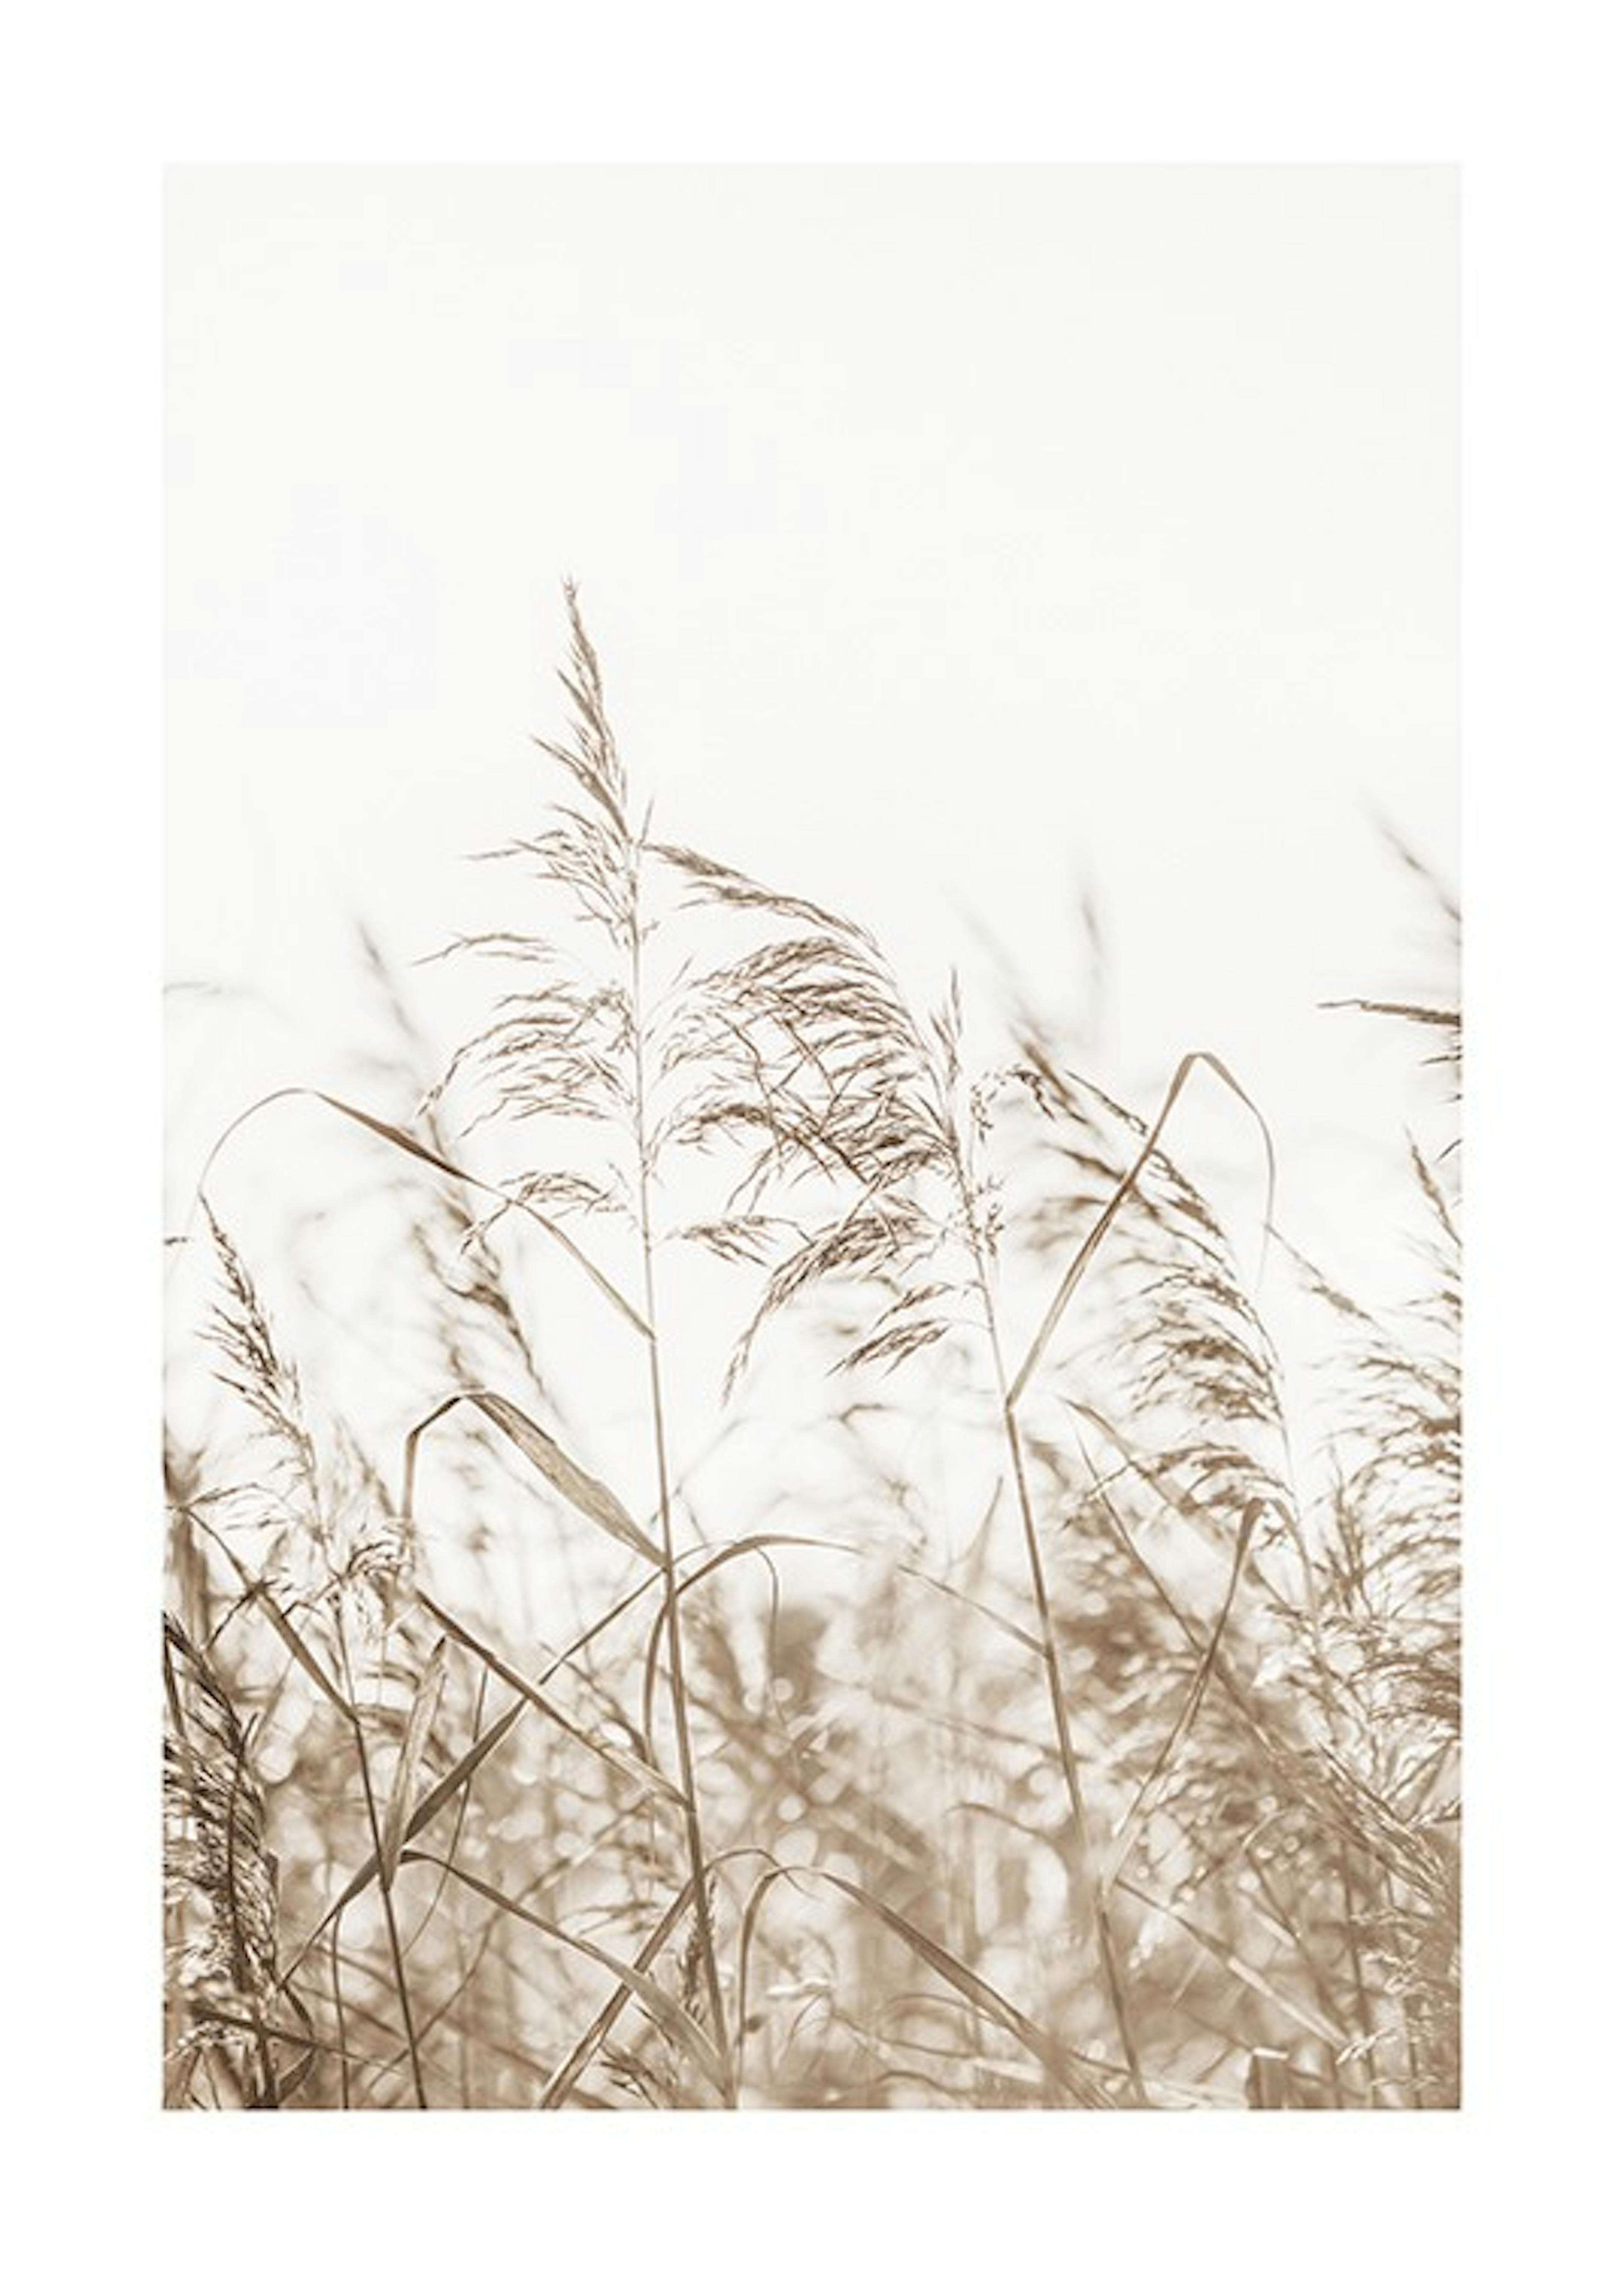 Dried Grass on Field No3 Print